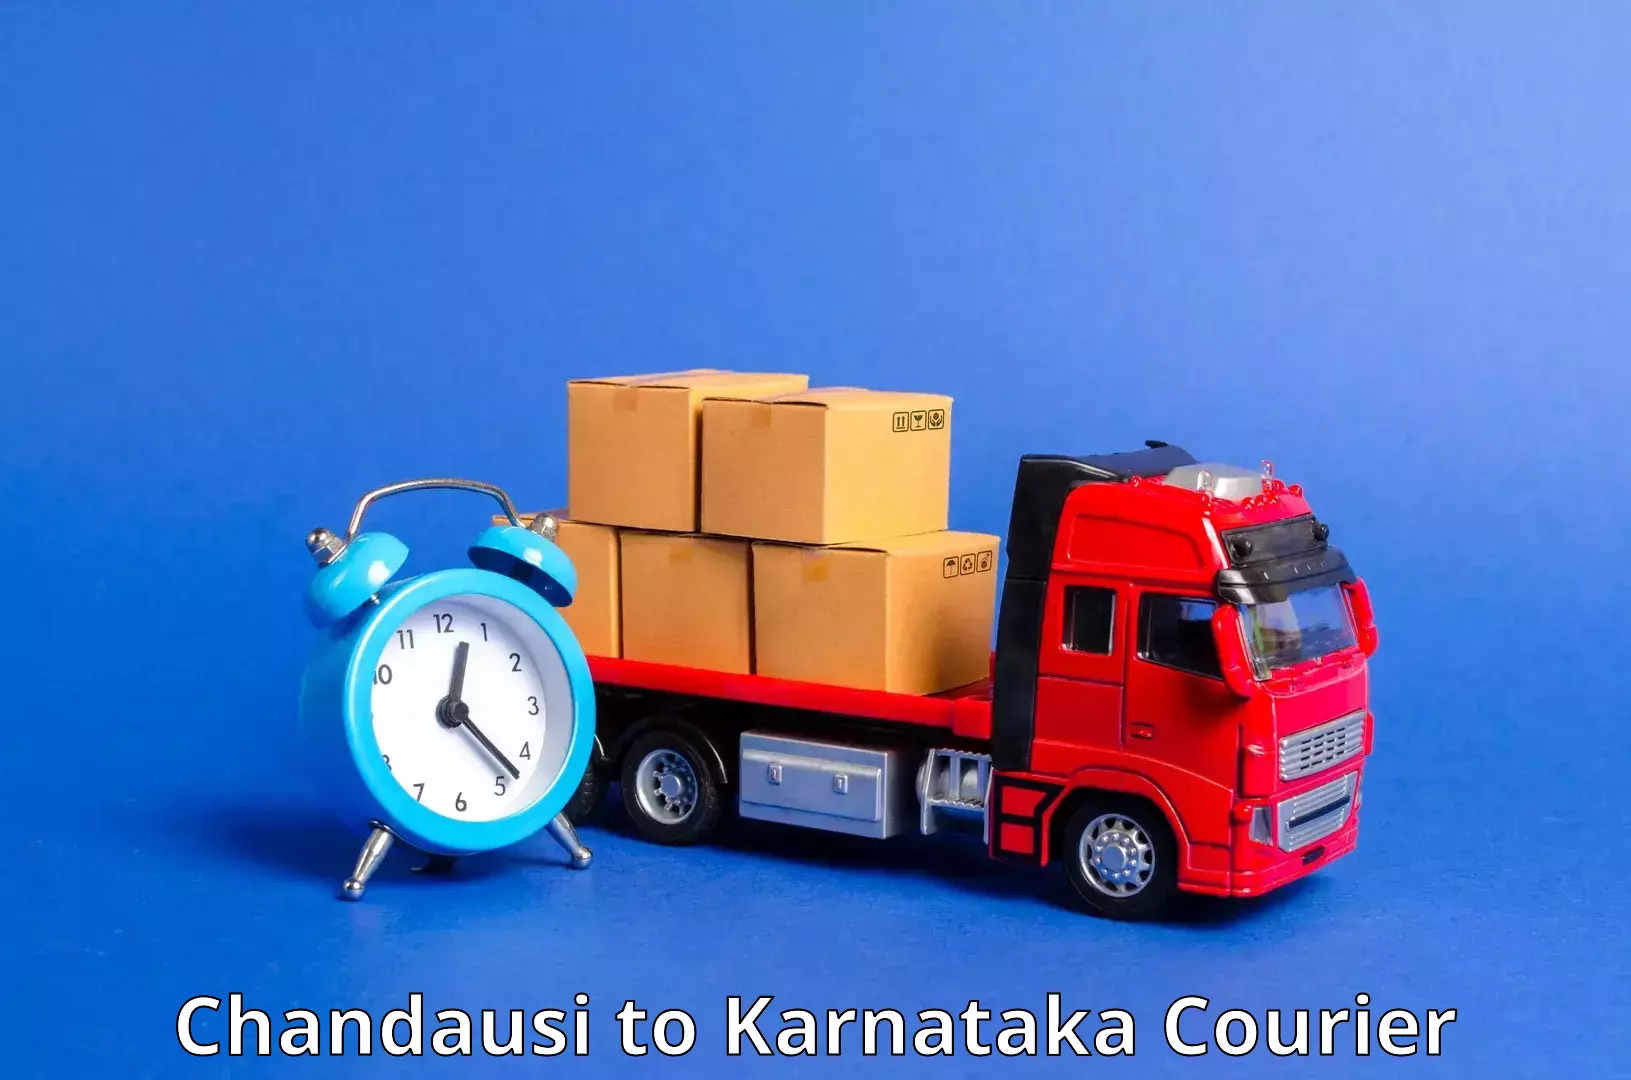 International parcel service Chandausi to Dabaspet